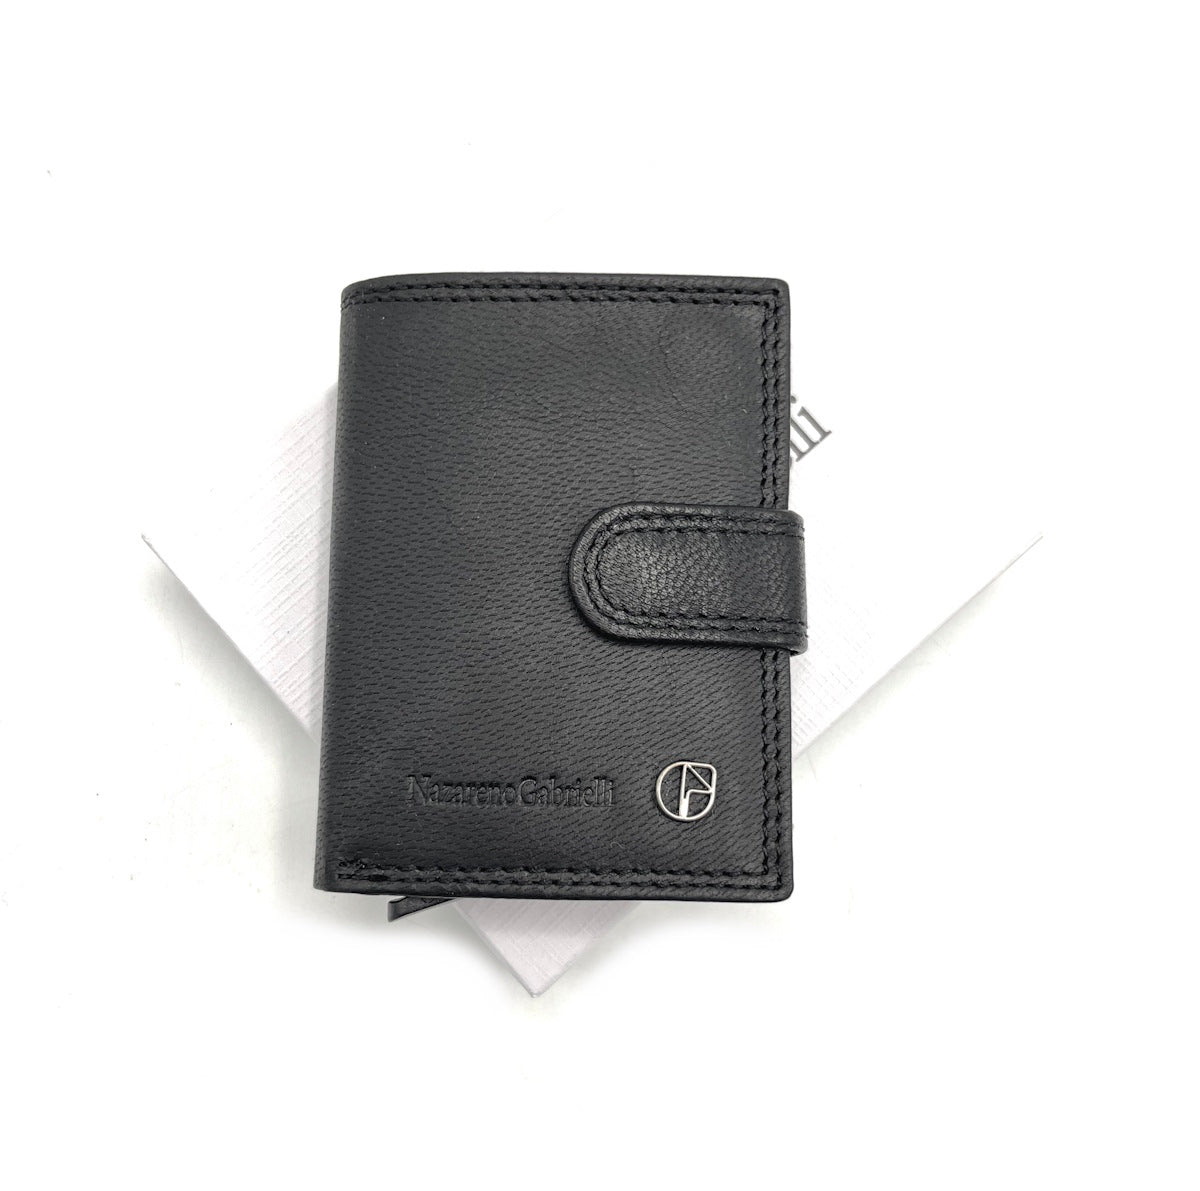 Genuine leather wallet, N.Gabrielli, art. PDK388-92